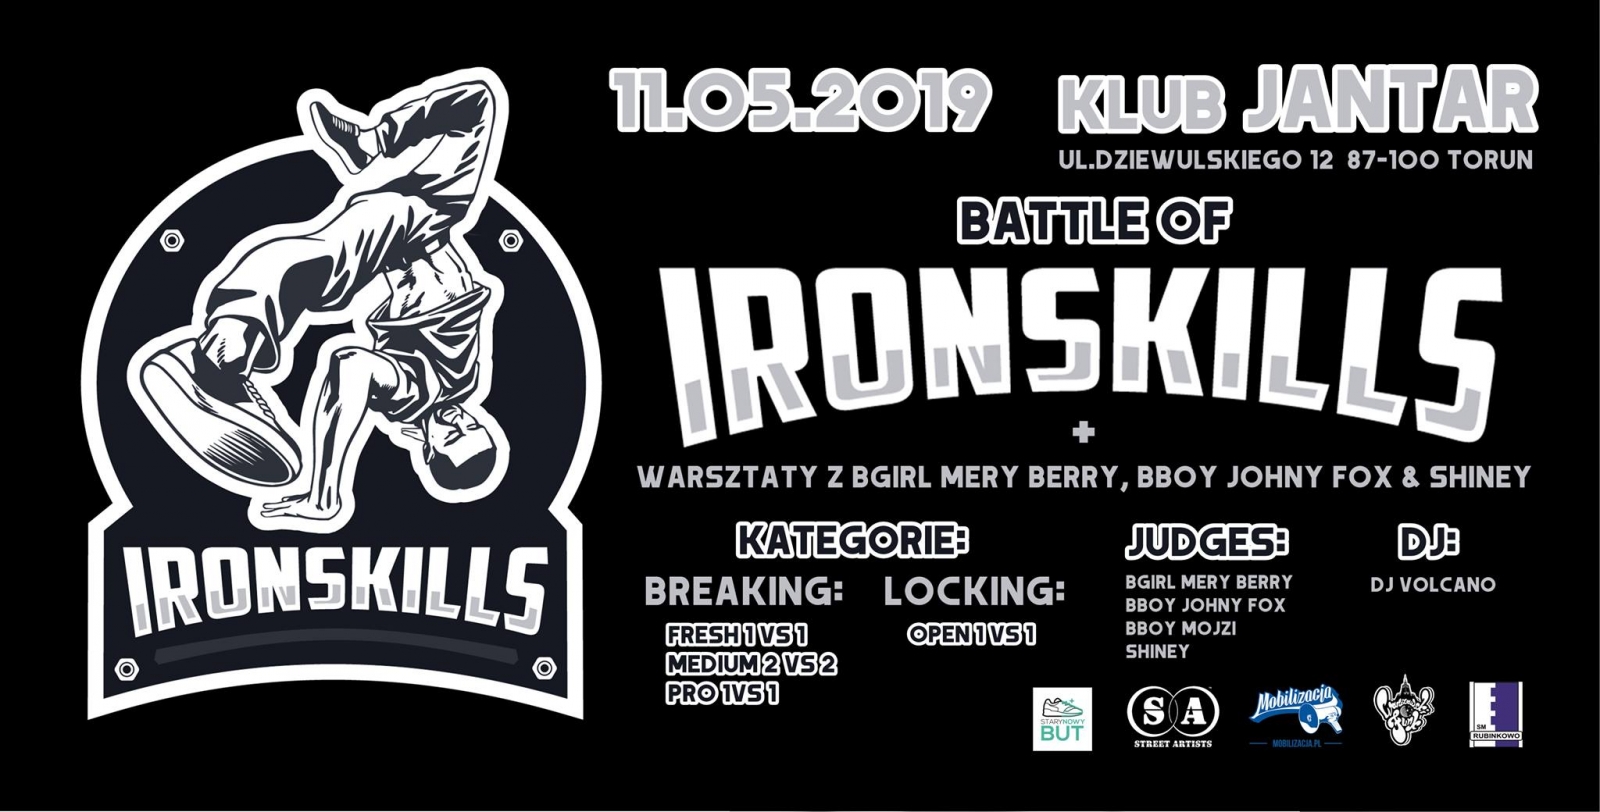 Battle Of Iron Skills 2019 poster